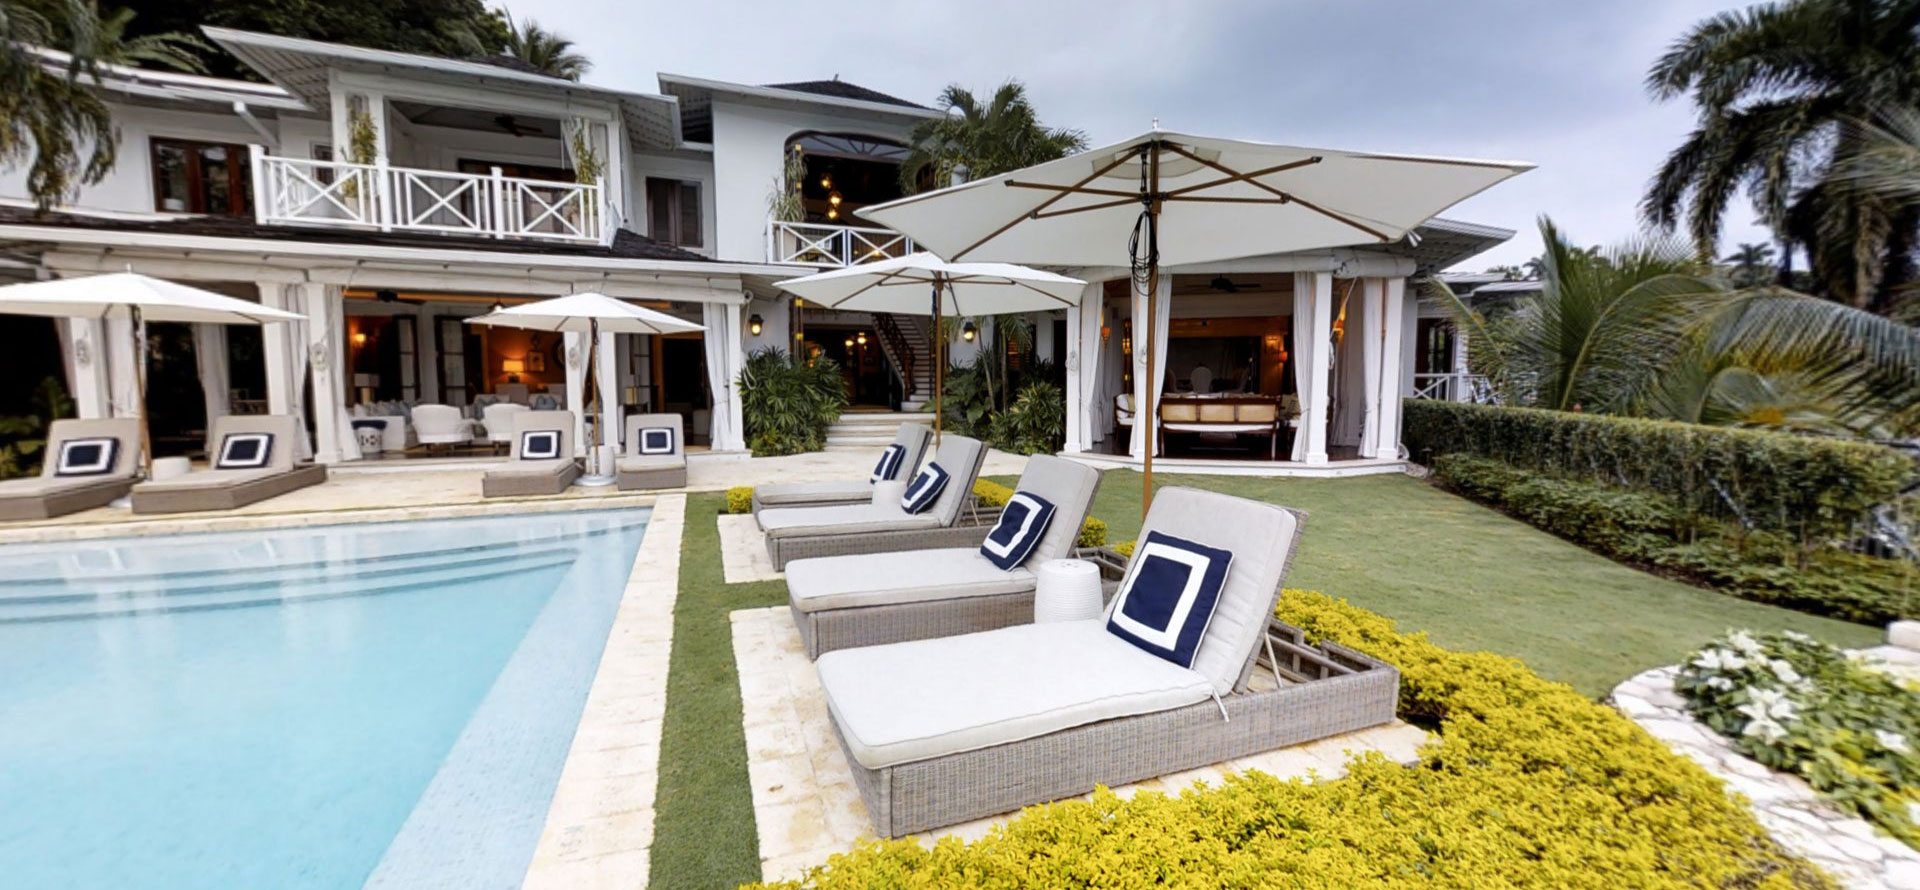 Jamaica luxury resort with swimming pool.